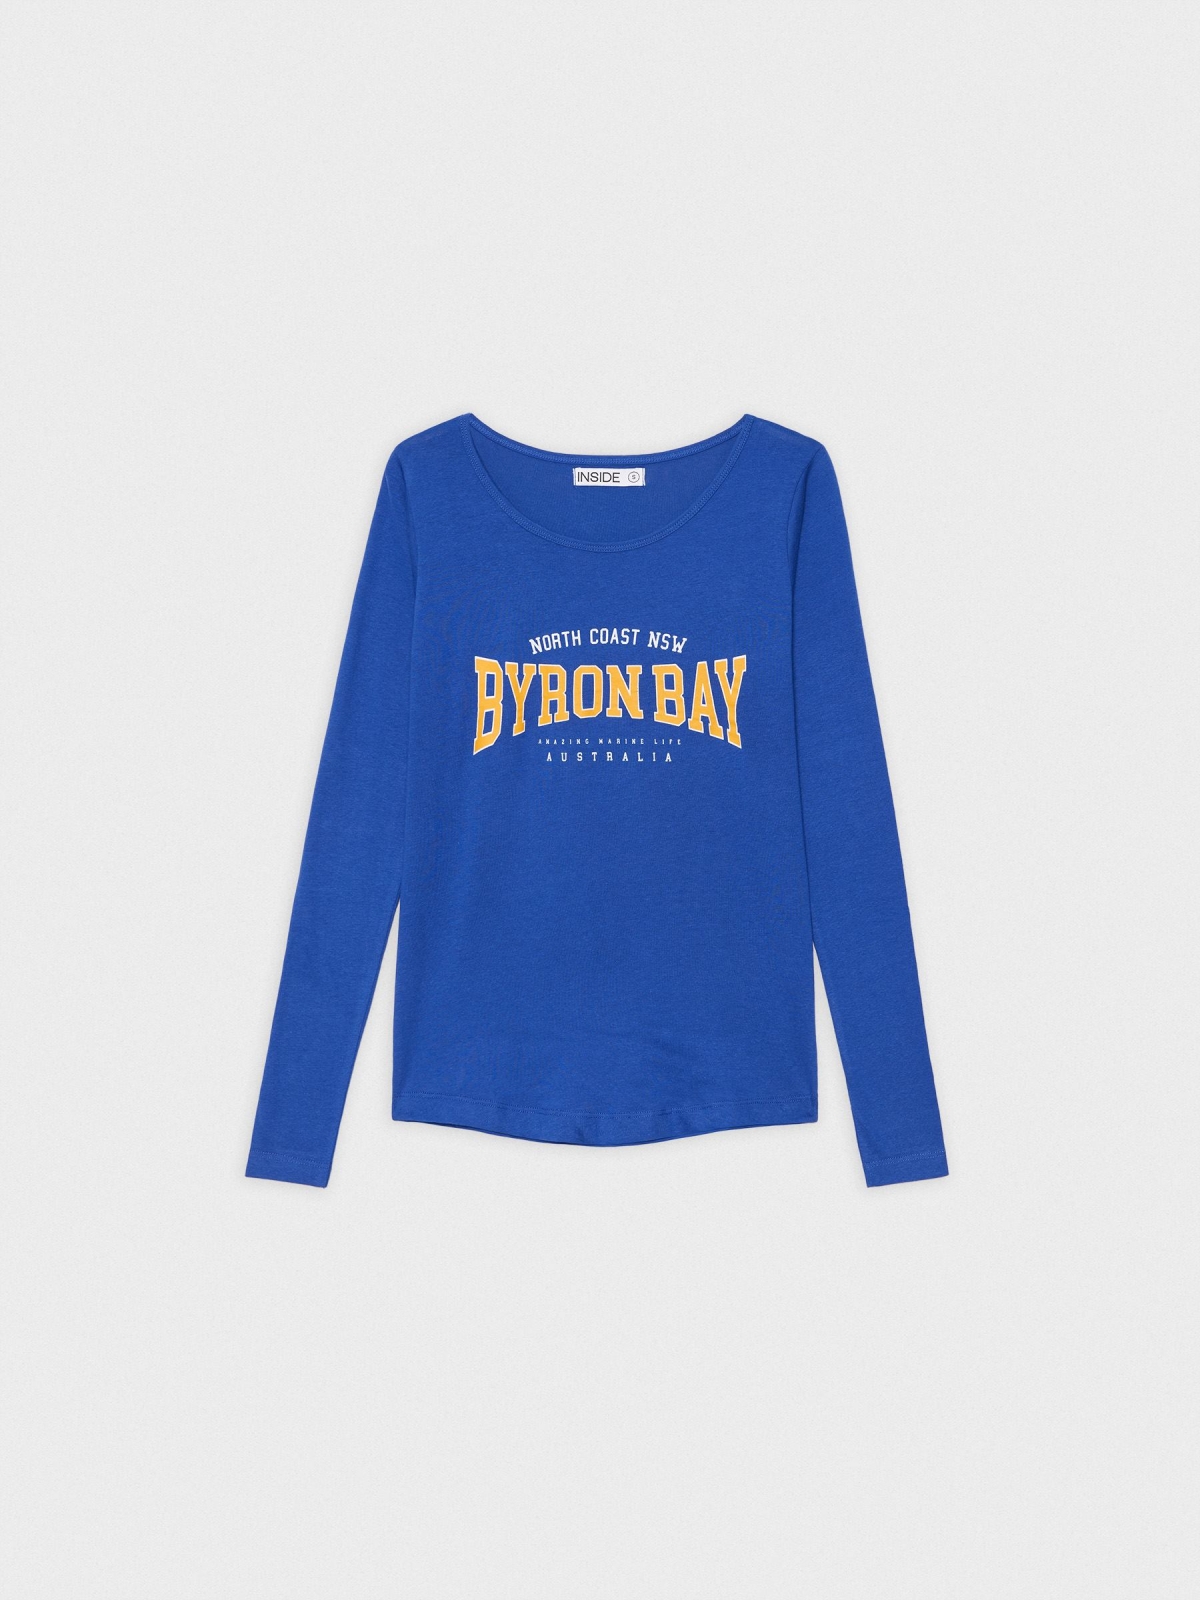  Camiseta Byron Bay azul oscuro